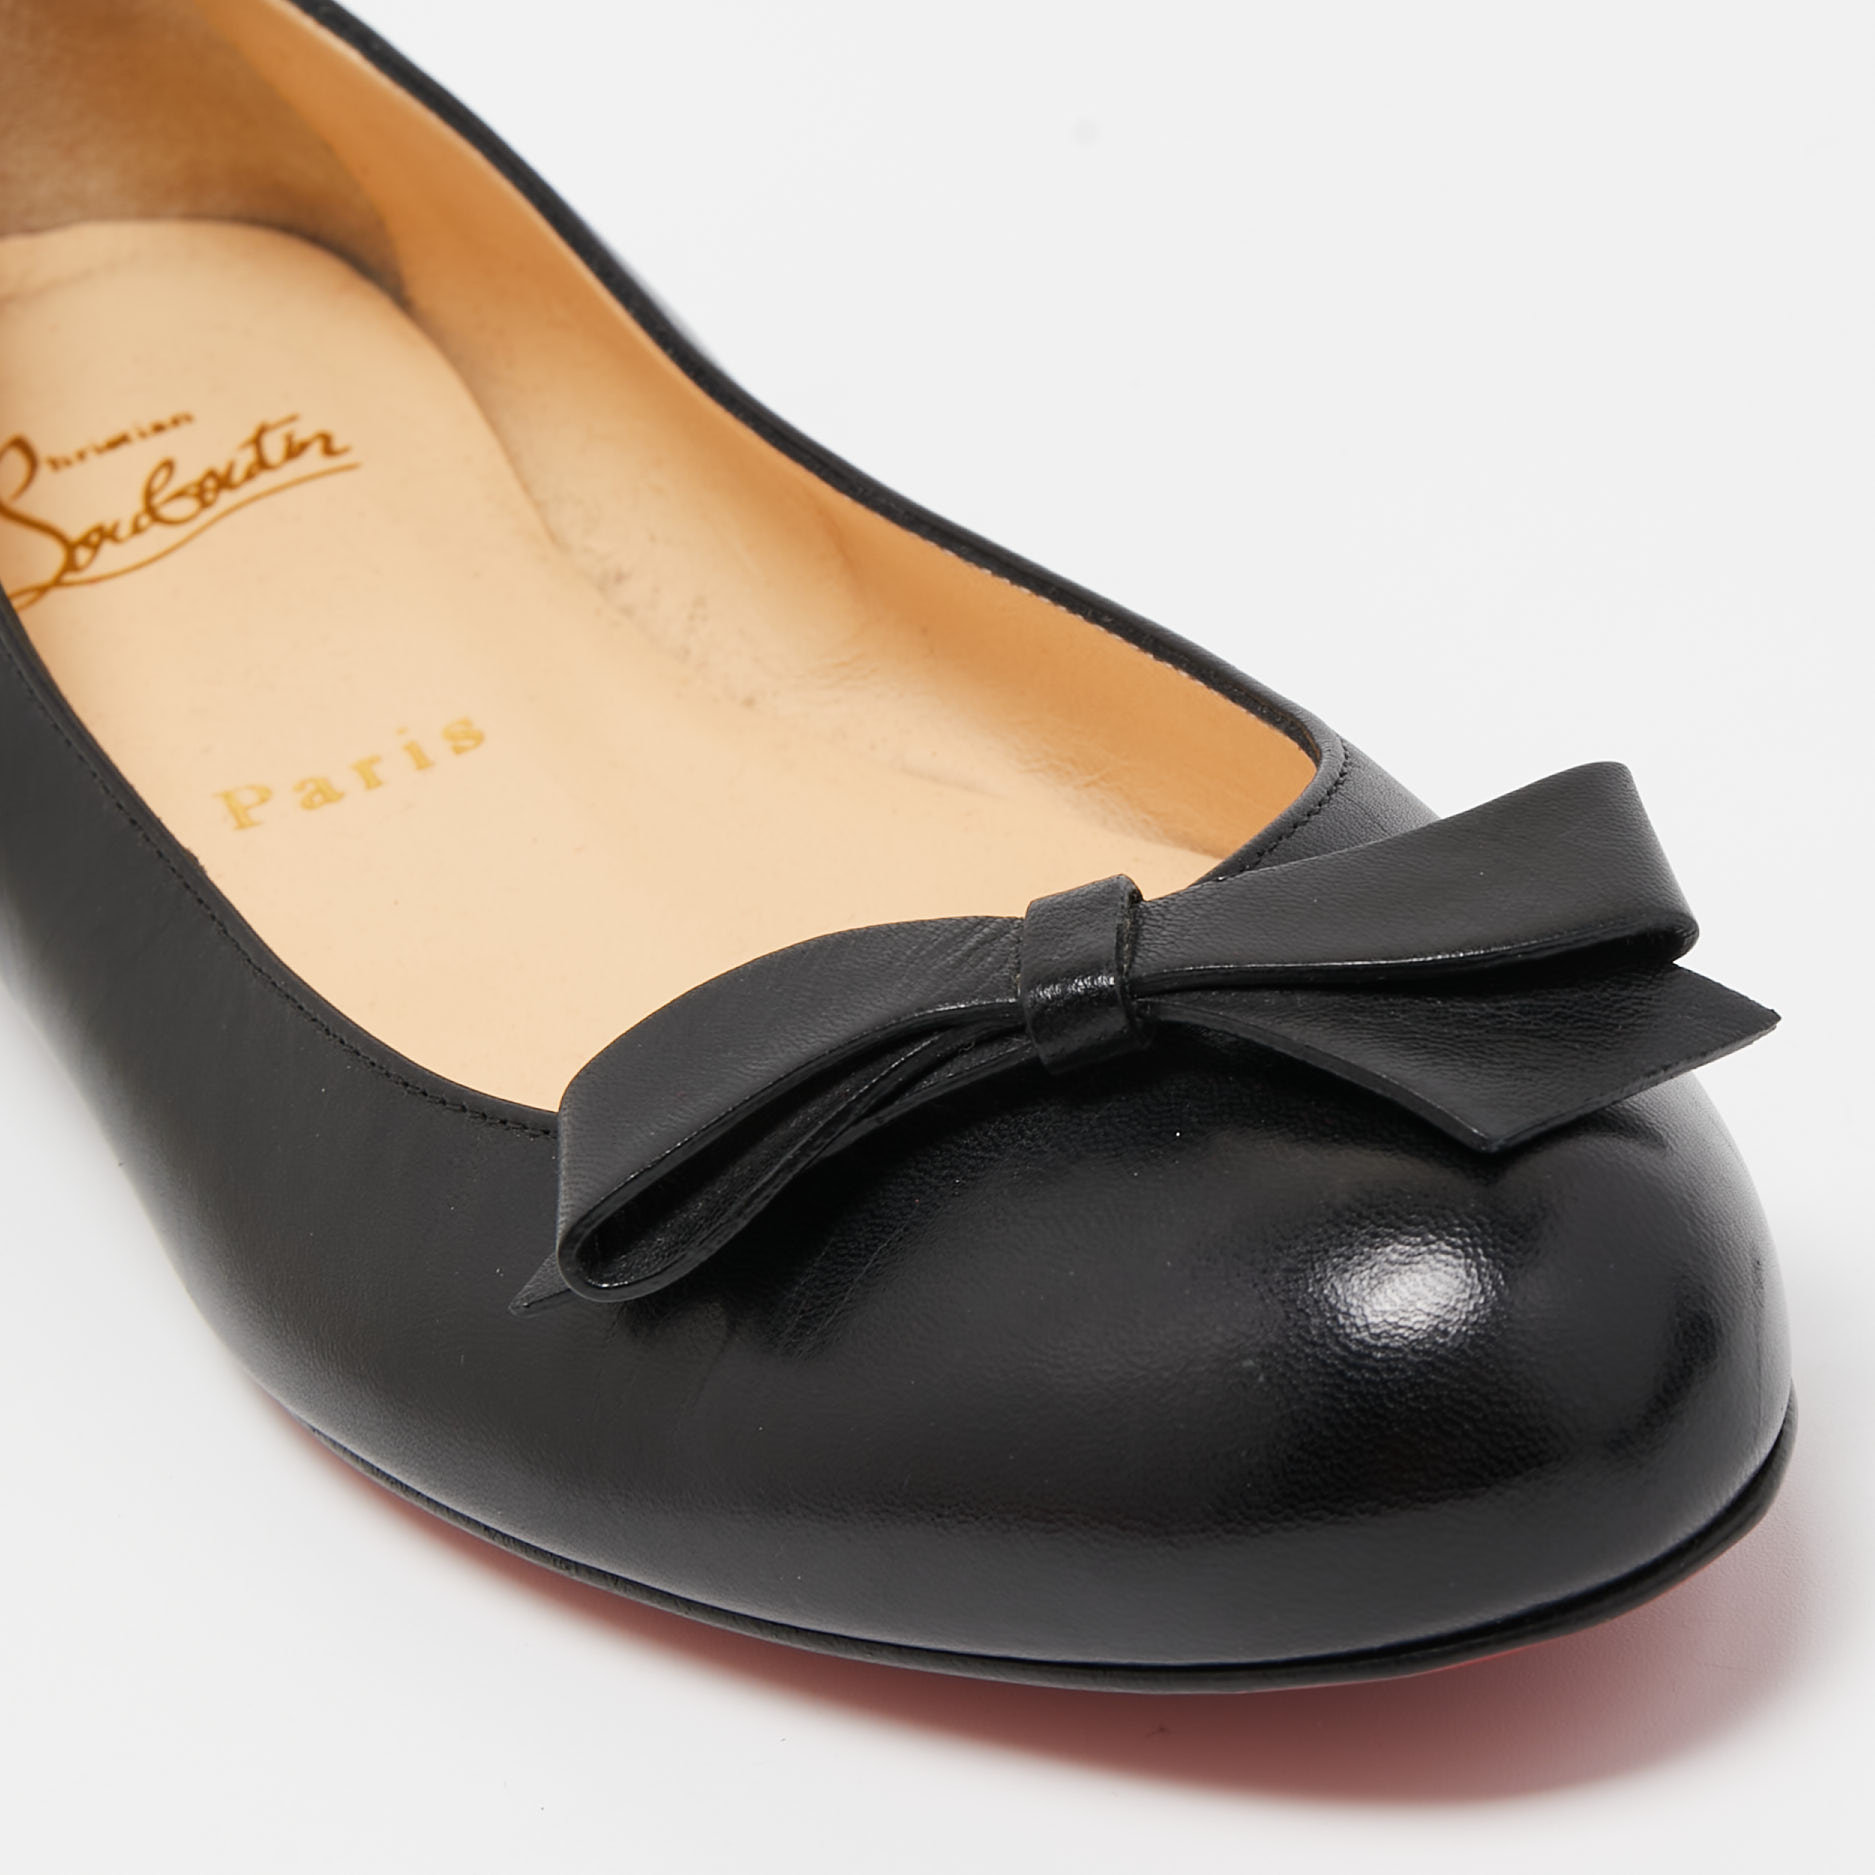 Christian Louboutin Black Leather Ballet Flats Size 37.5